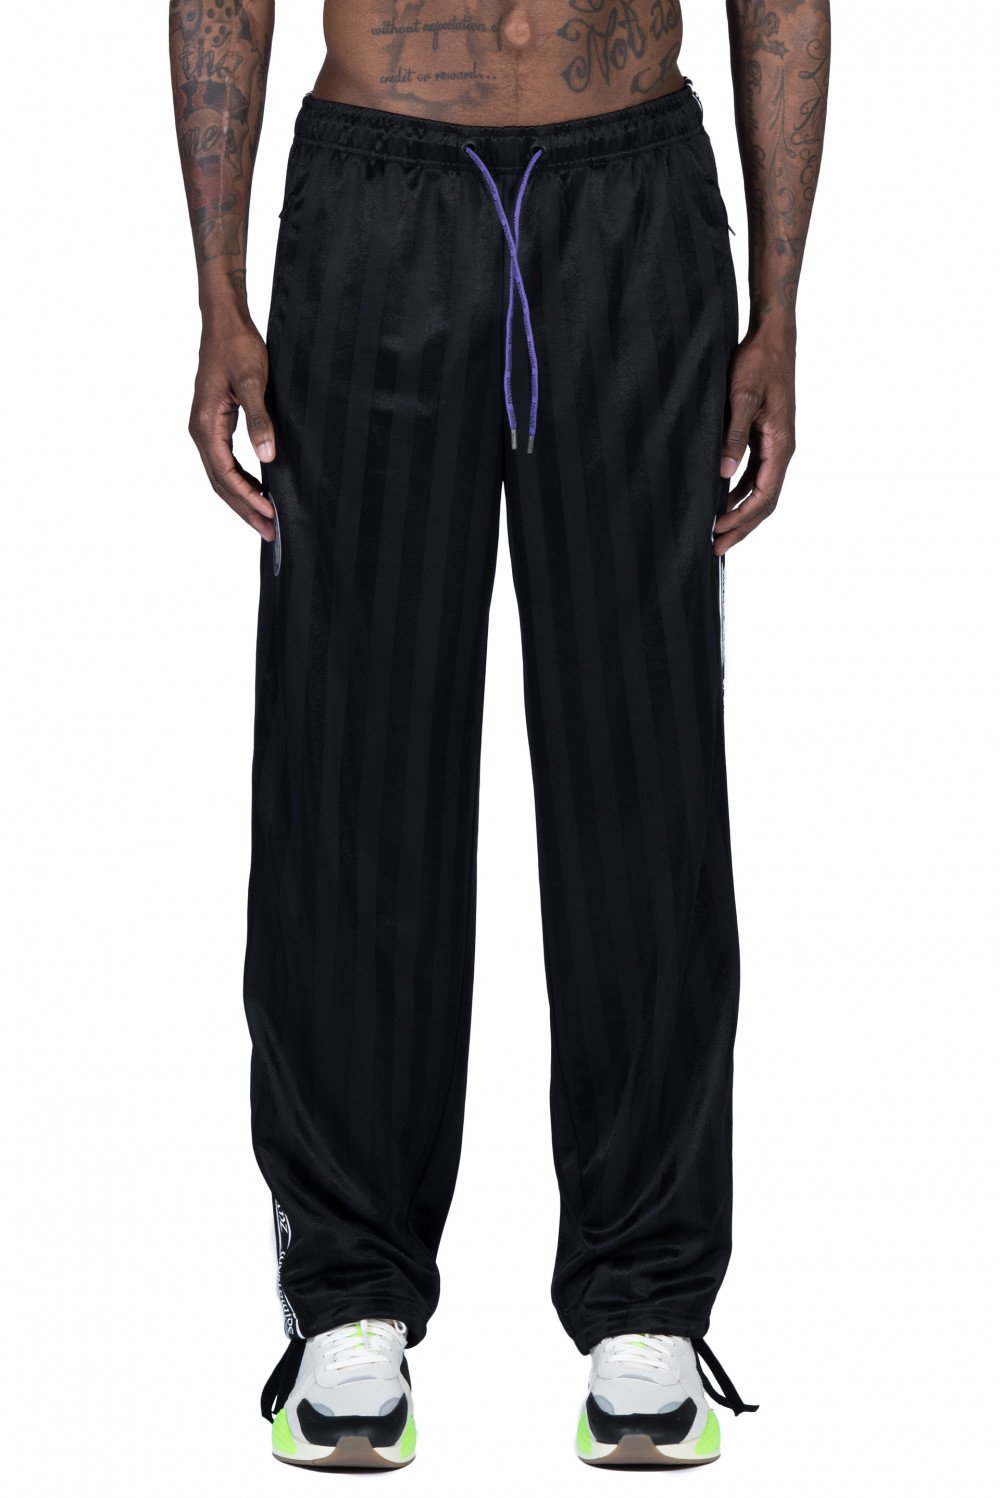 adidas Originals Superstar Tricot Track Pants | Track pants mens, Mens  outfits, Adidas originals superstar